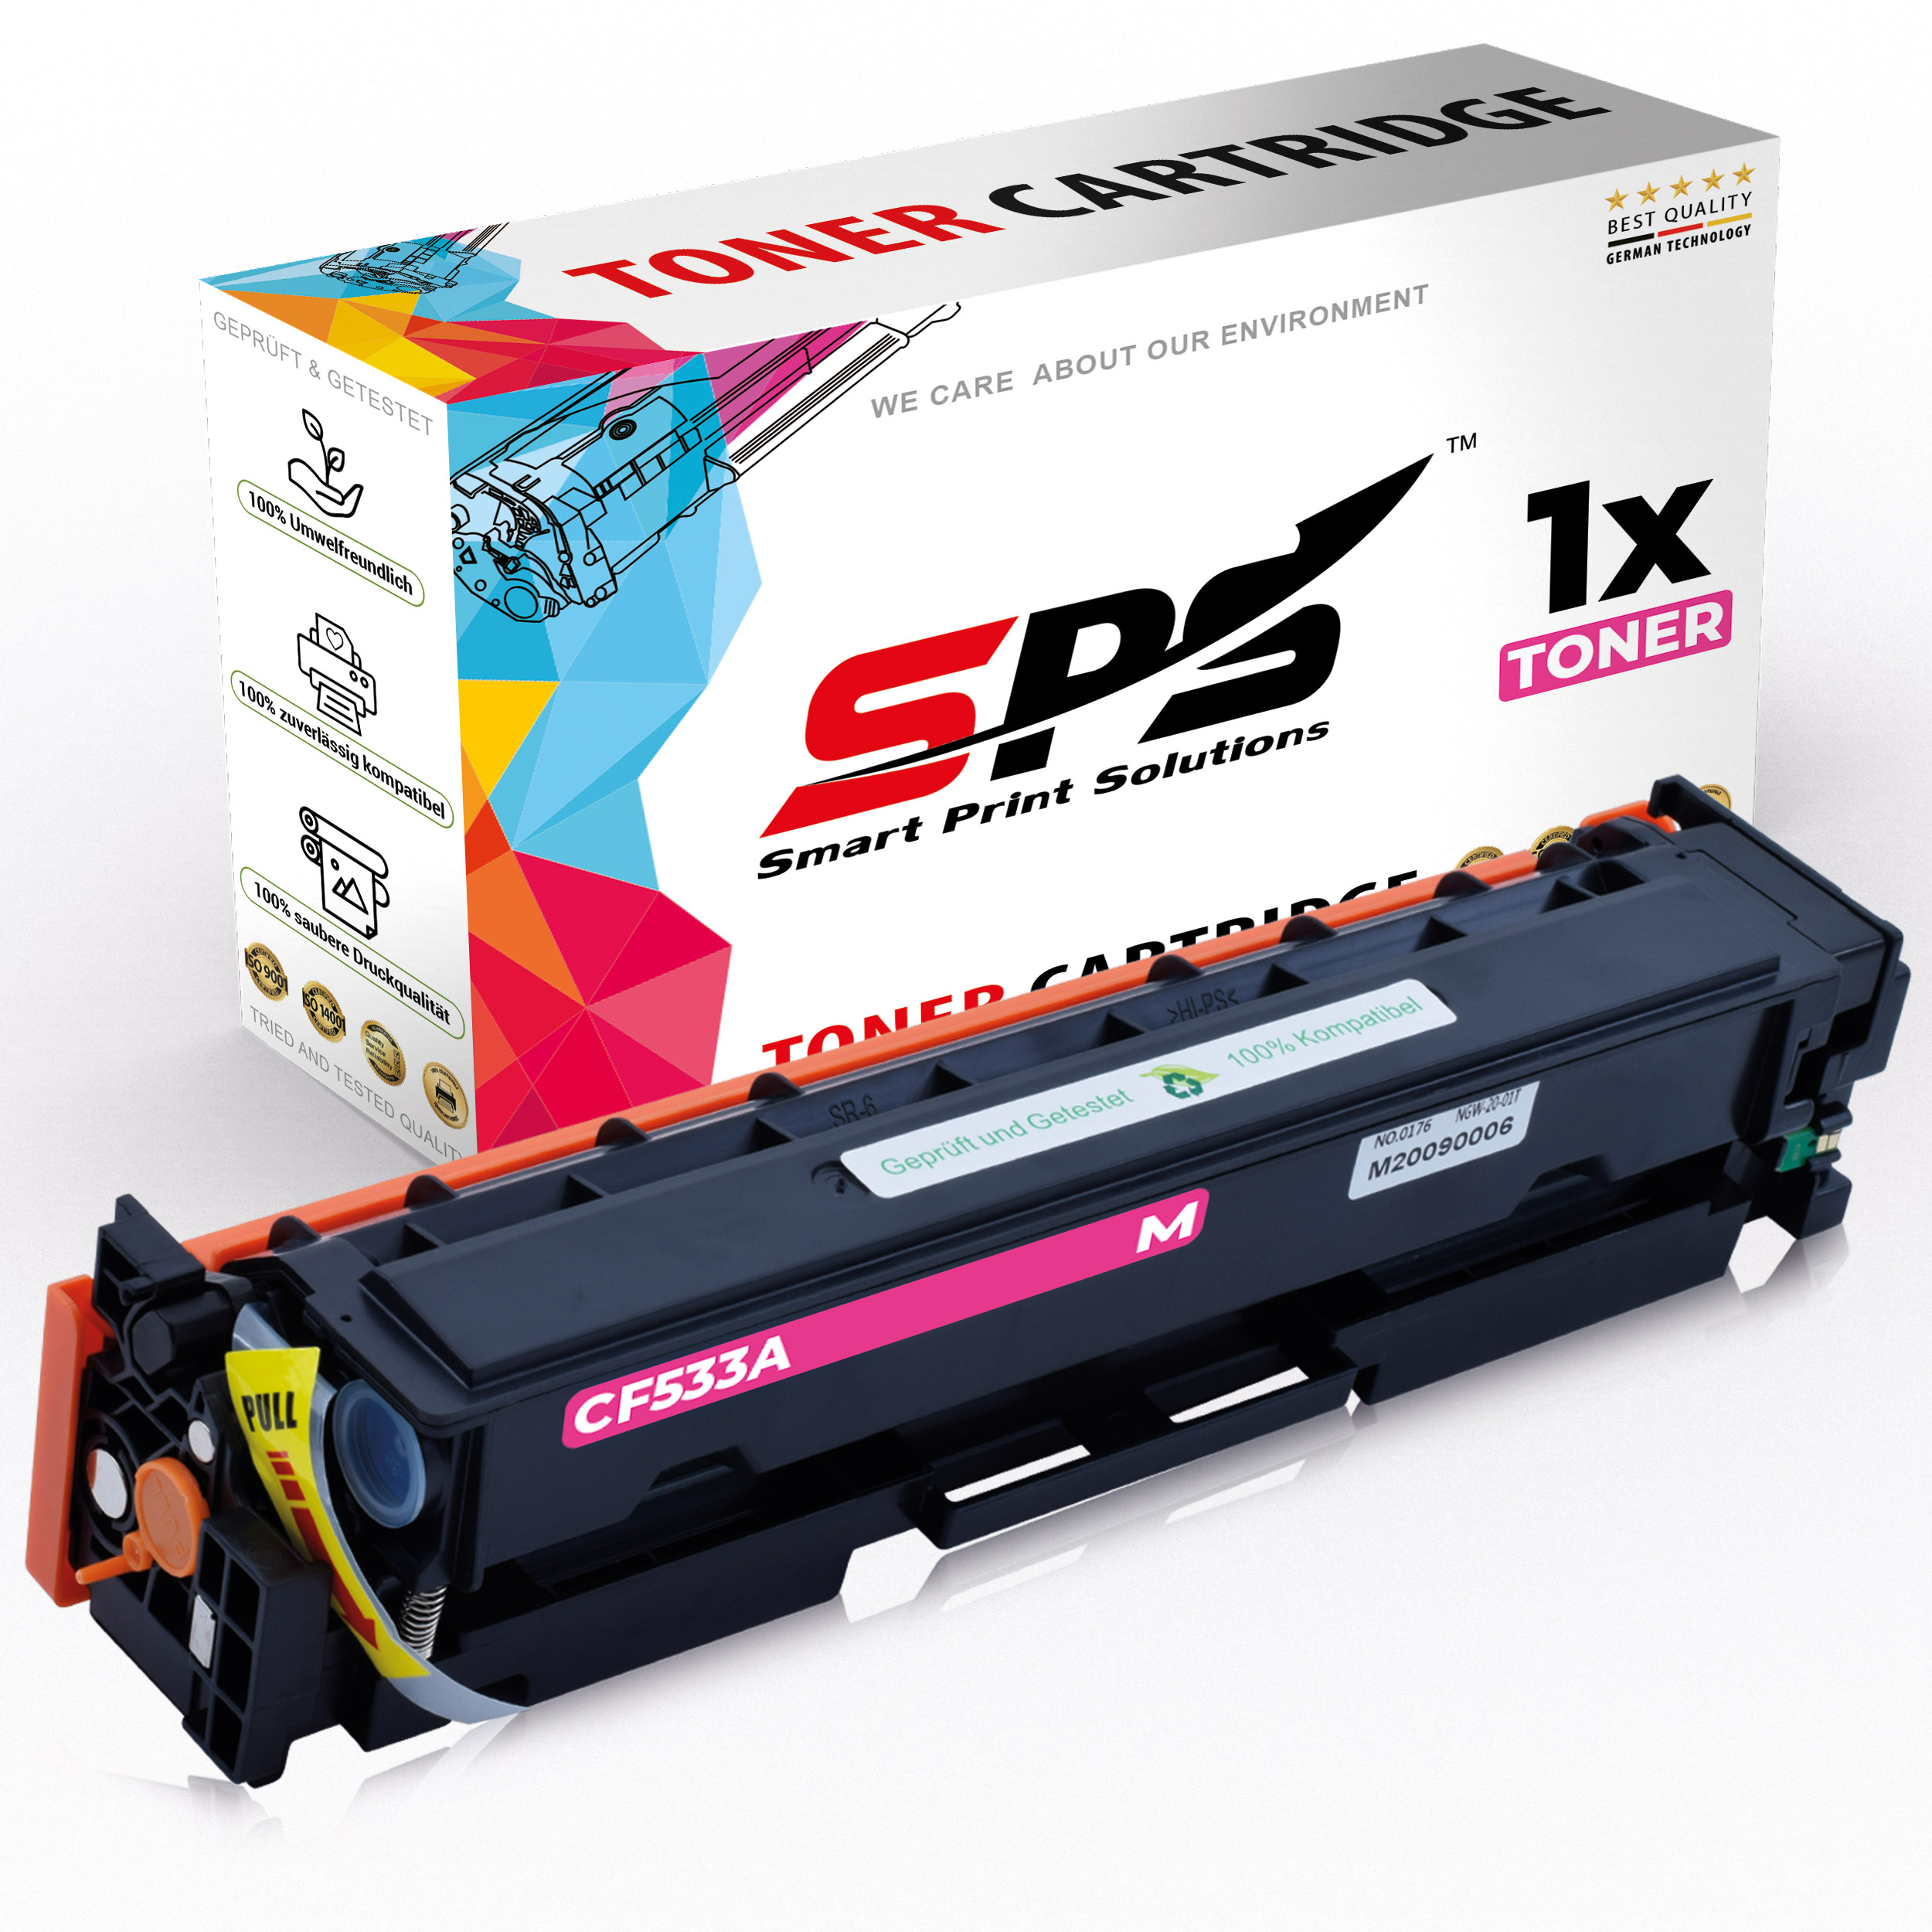 SPS S-16649 Pro / (205A Toner Magenta CF533A M154) Laserjet Color